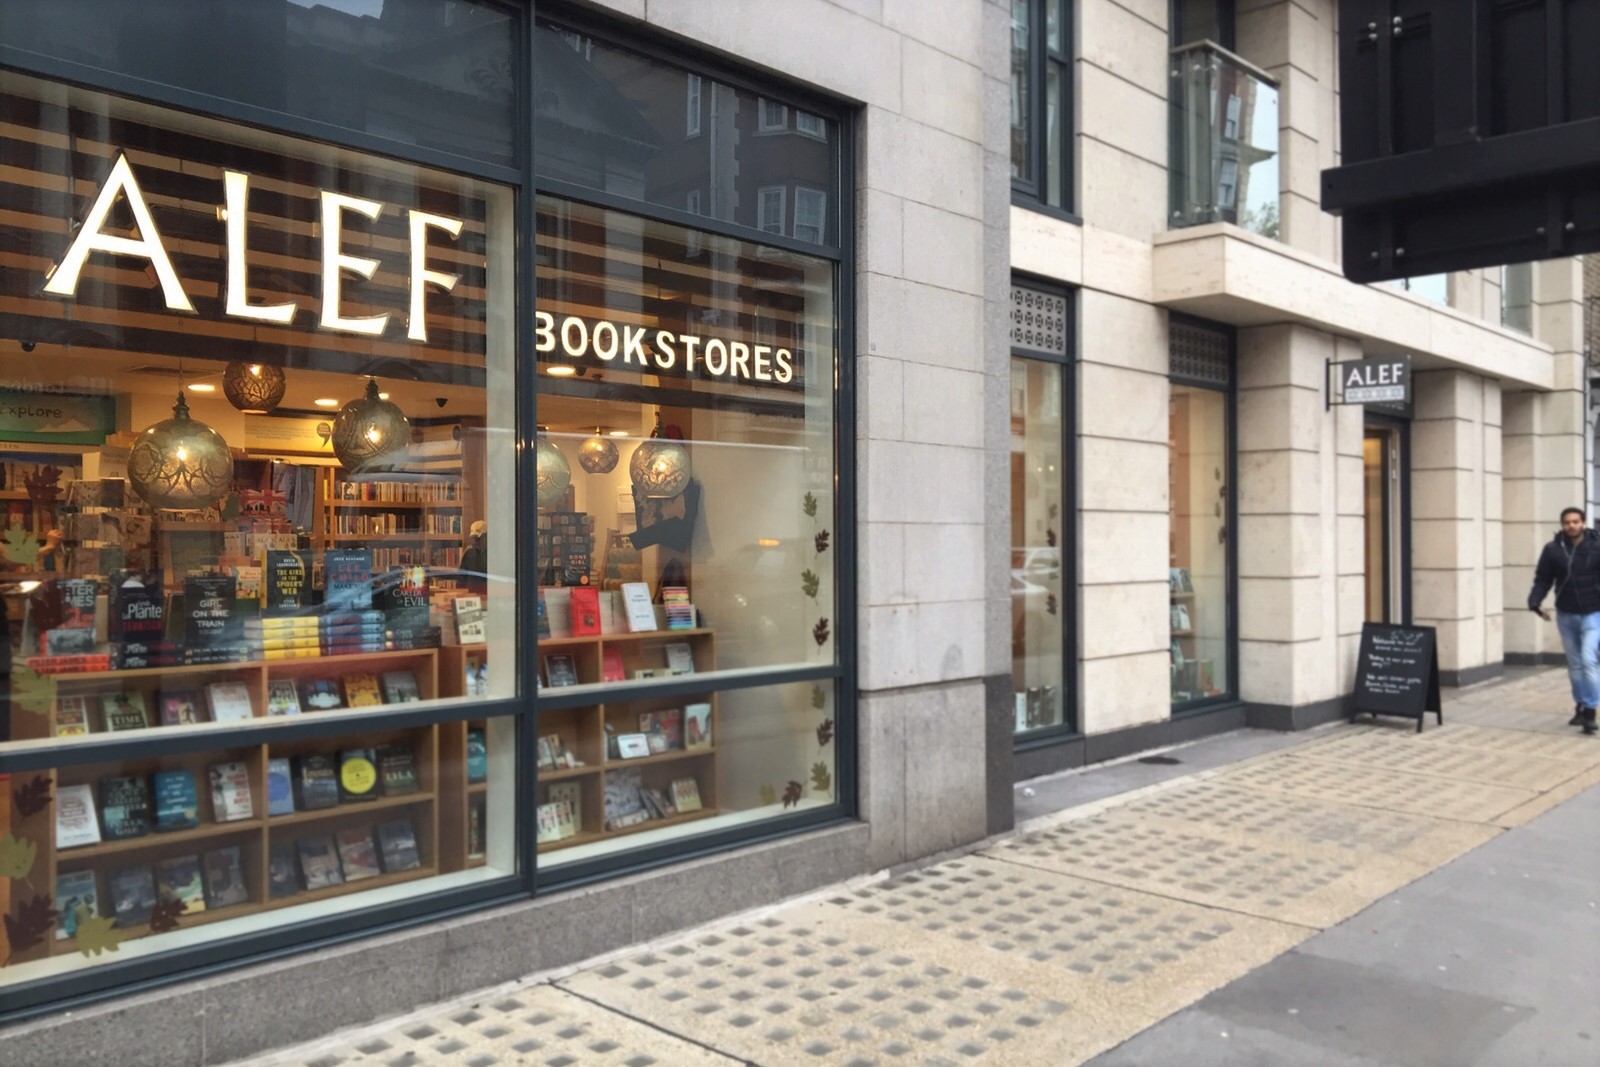 Alef Bookstore's latest branch on Baker Street, London, UK. Courtesy of Alef Bookstores